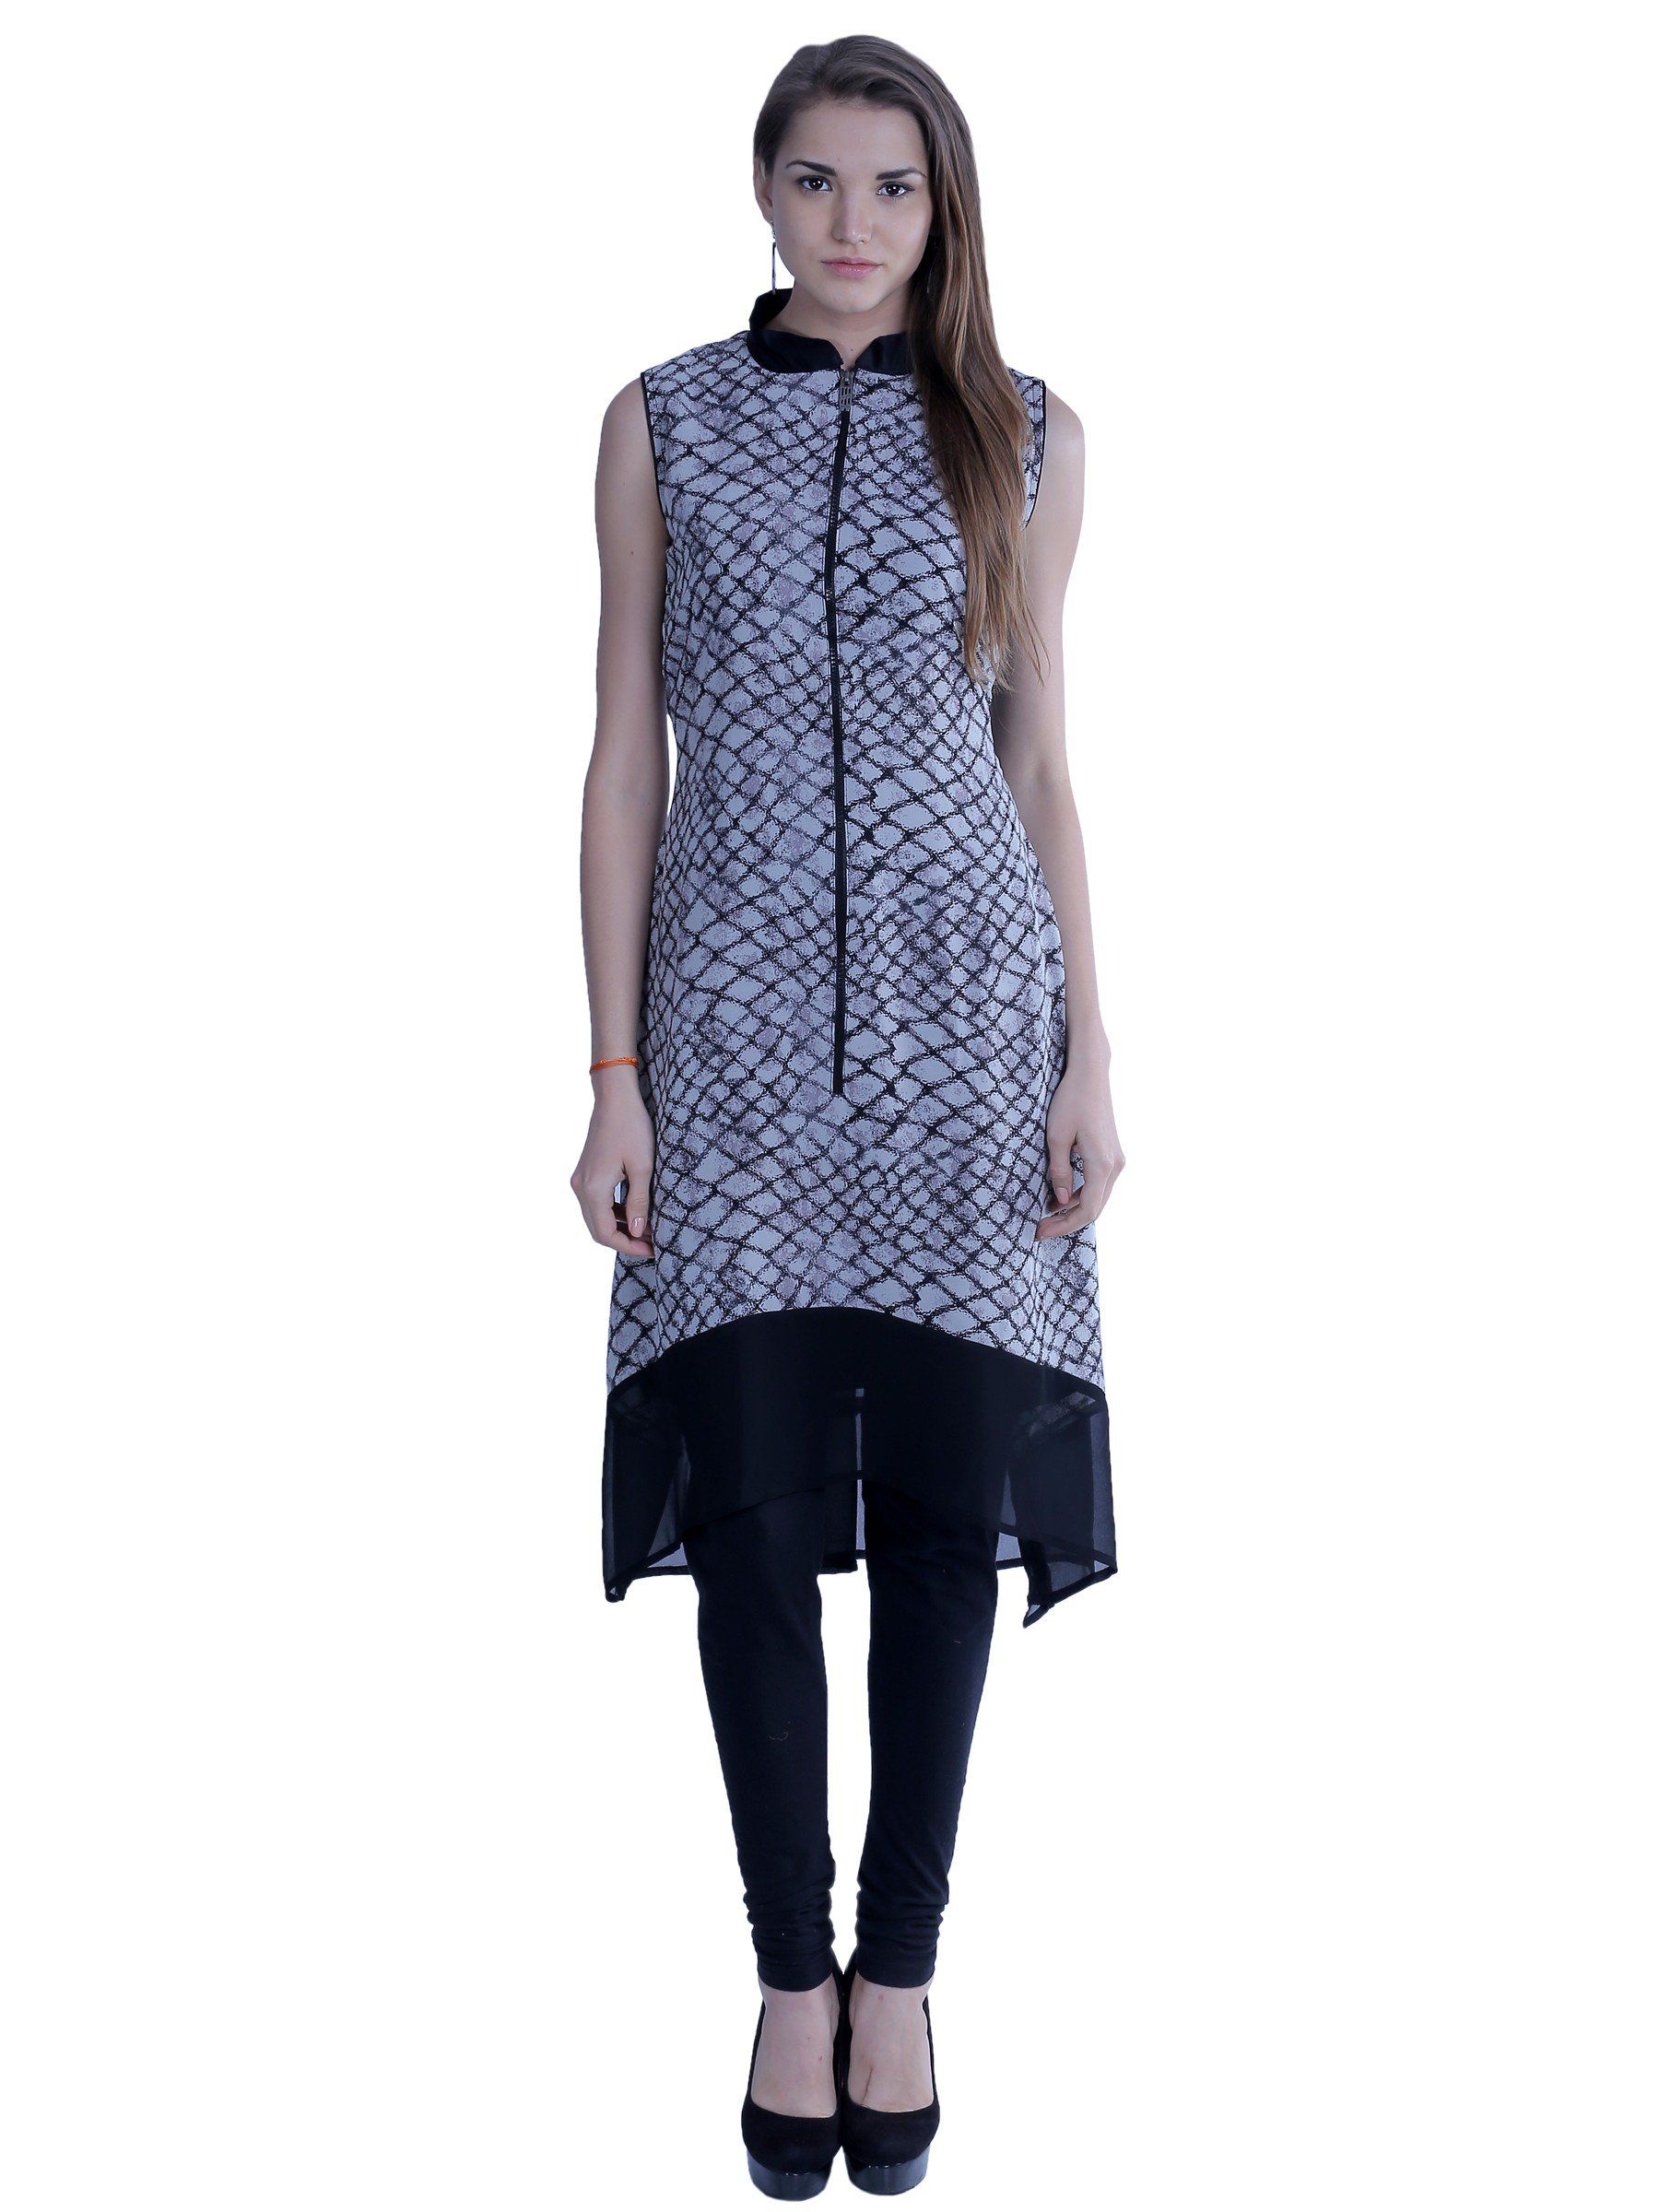 Kurtis_Workwear_Monday_Monochrome-Prints_Fashion_Style - Hautelist